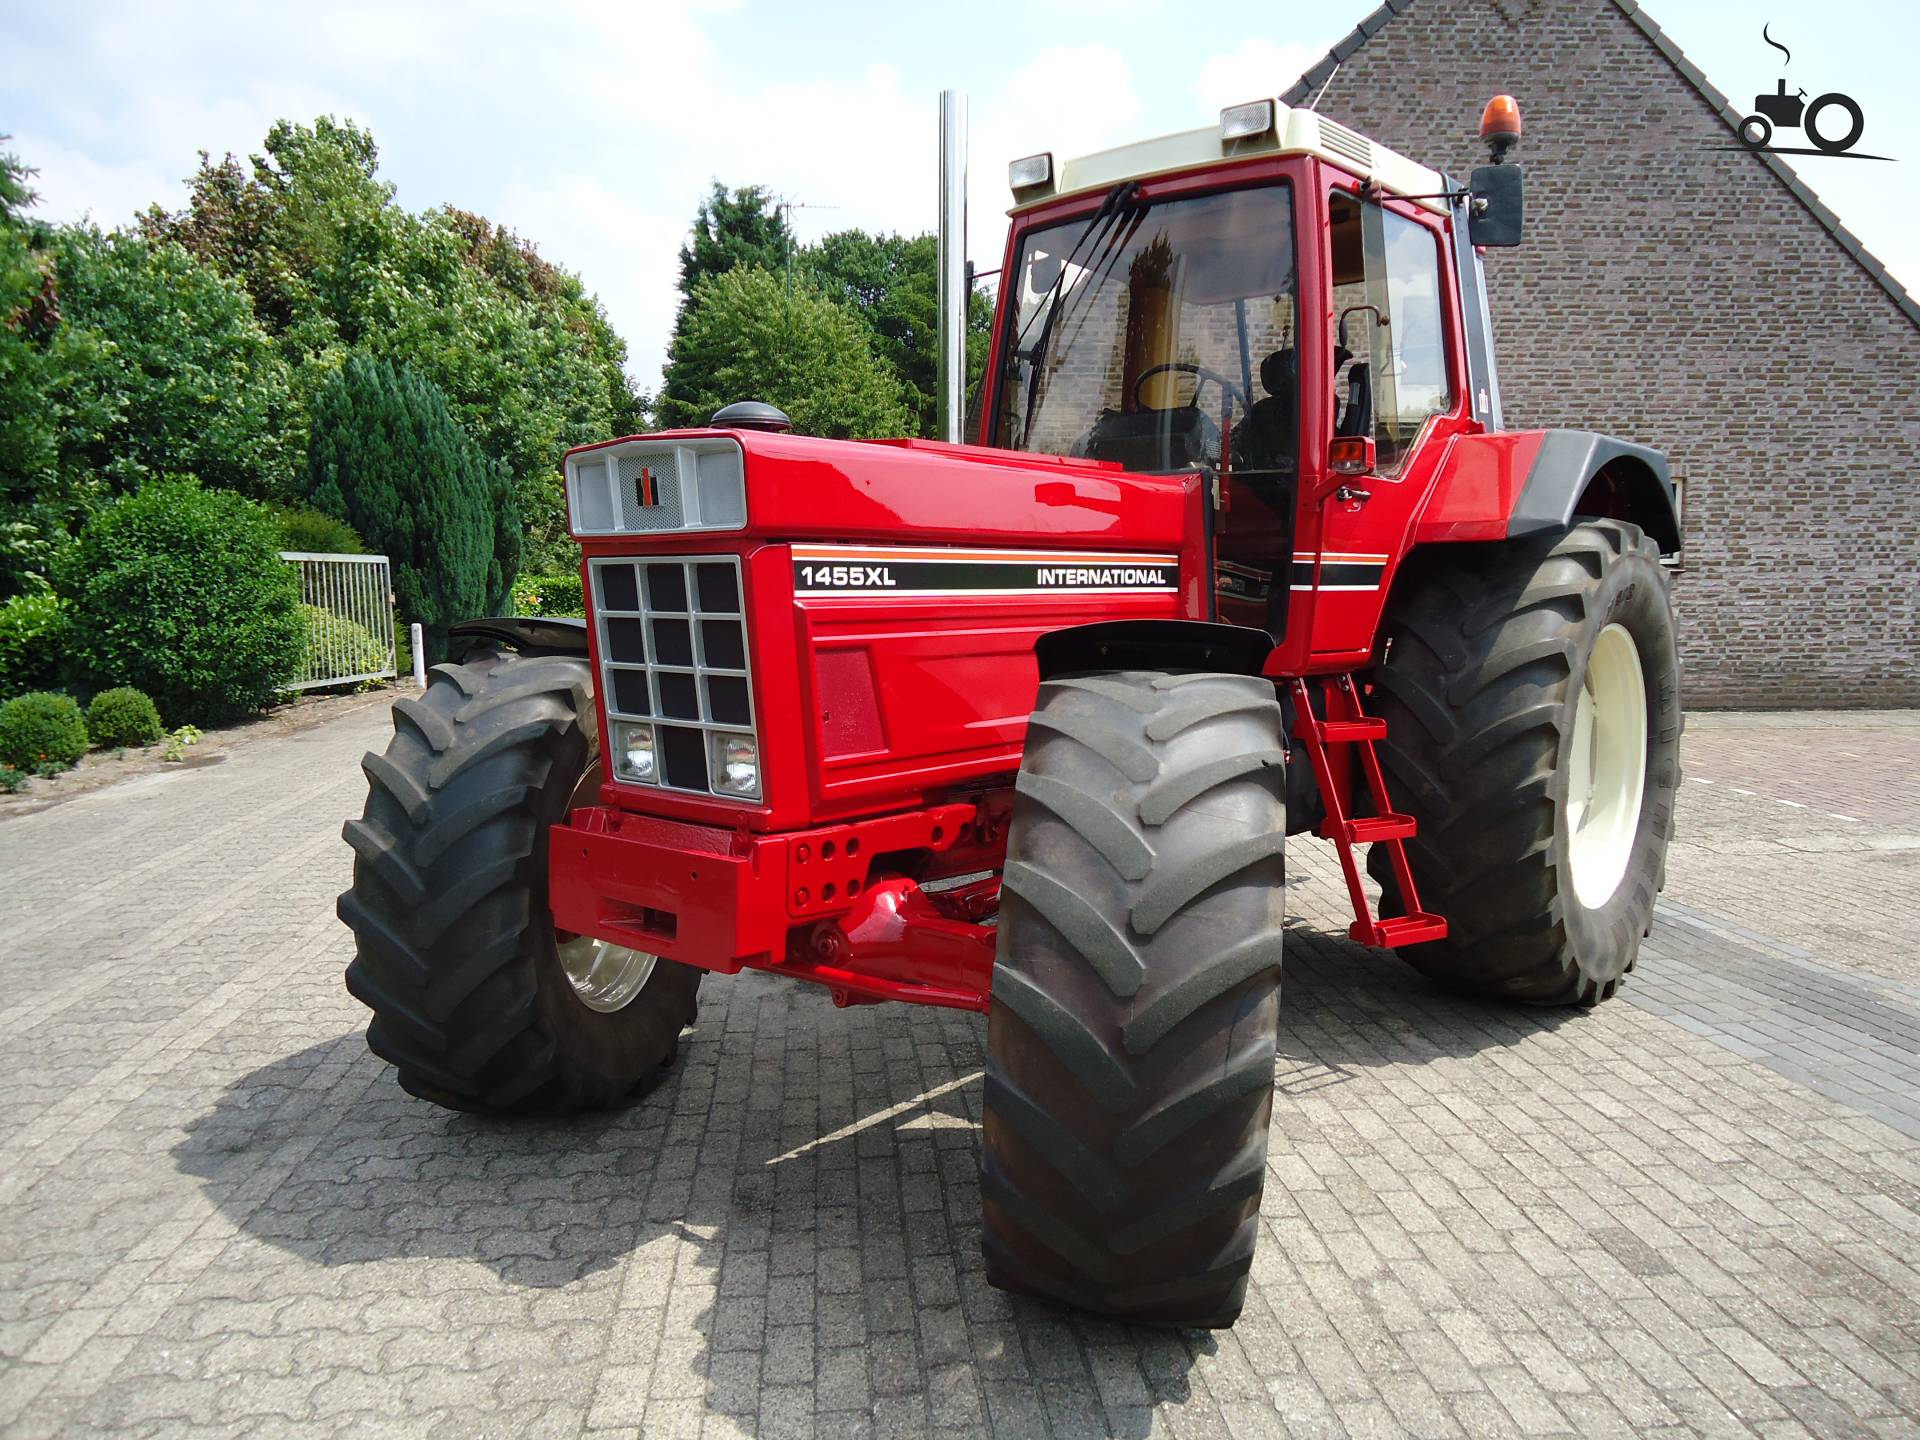 Pin International Harvester 1455 Xl Chenedol Tractor on Pinterest